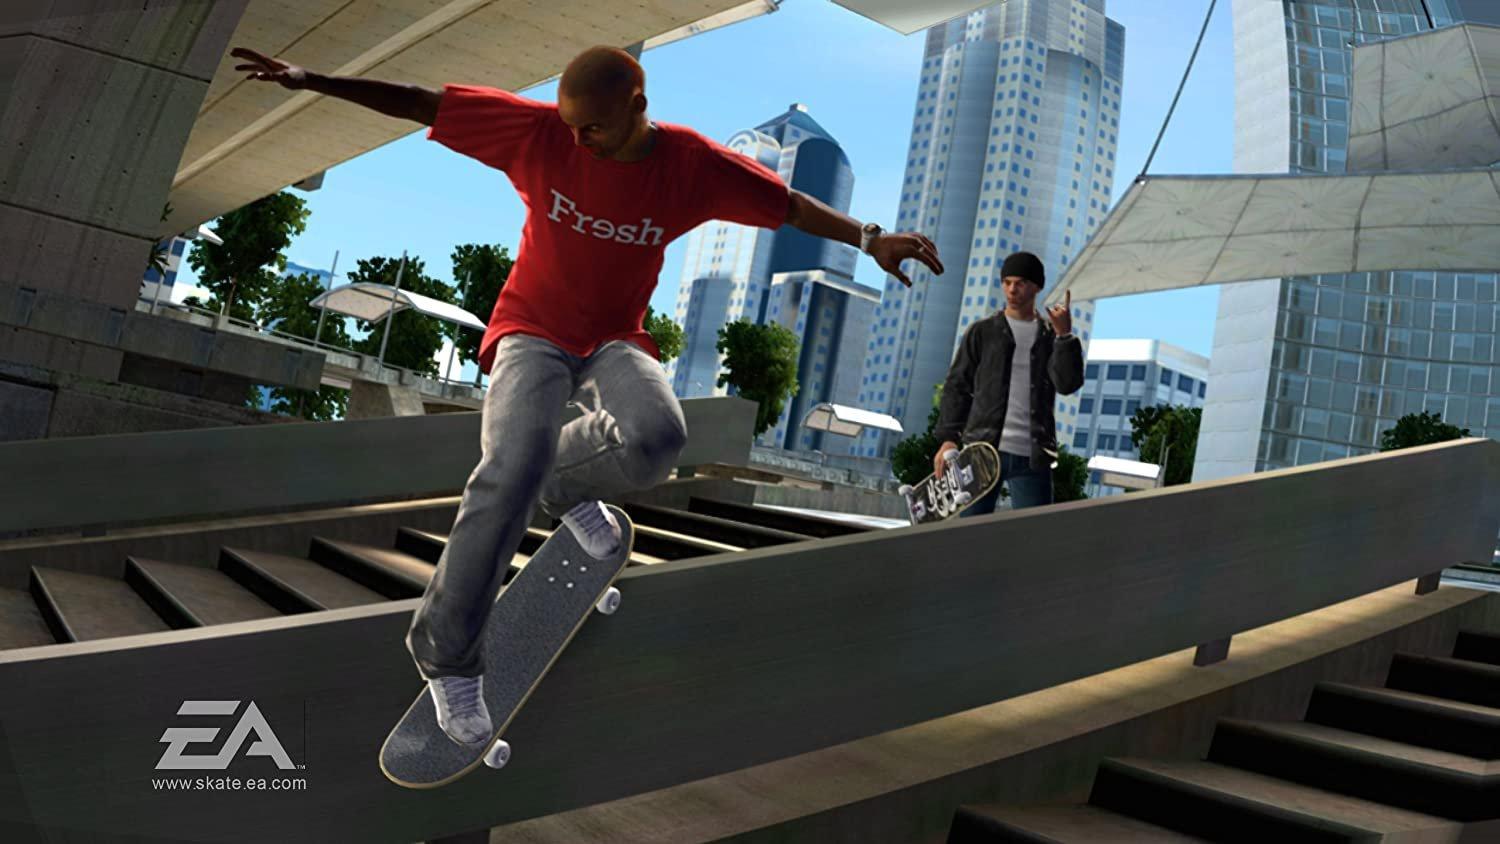 Skate 3 - Xbox 360 / Xbox One - Game Games - Loja de Games Online